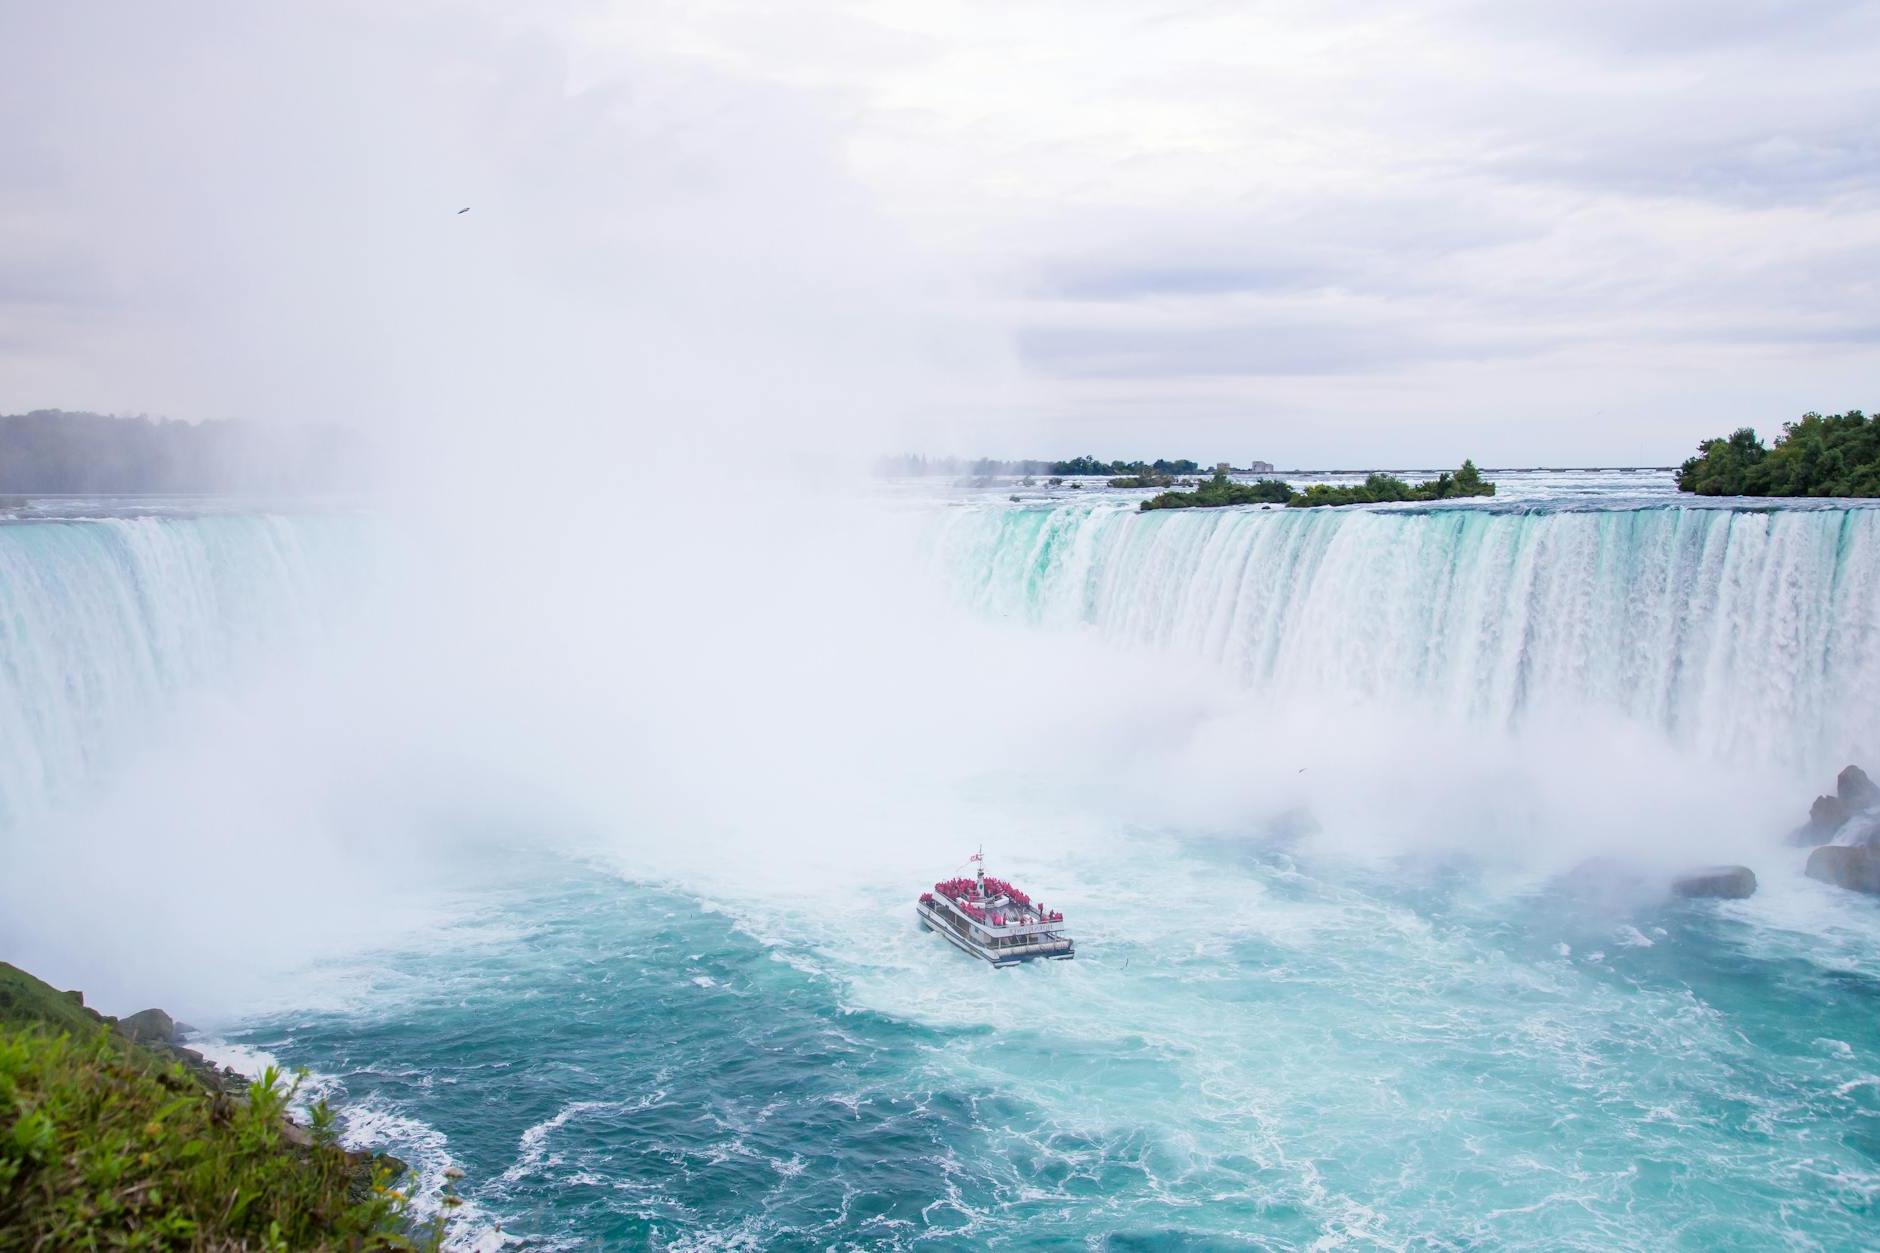 Splashing Niagara Falls and yacht sailing on river